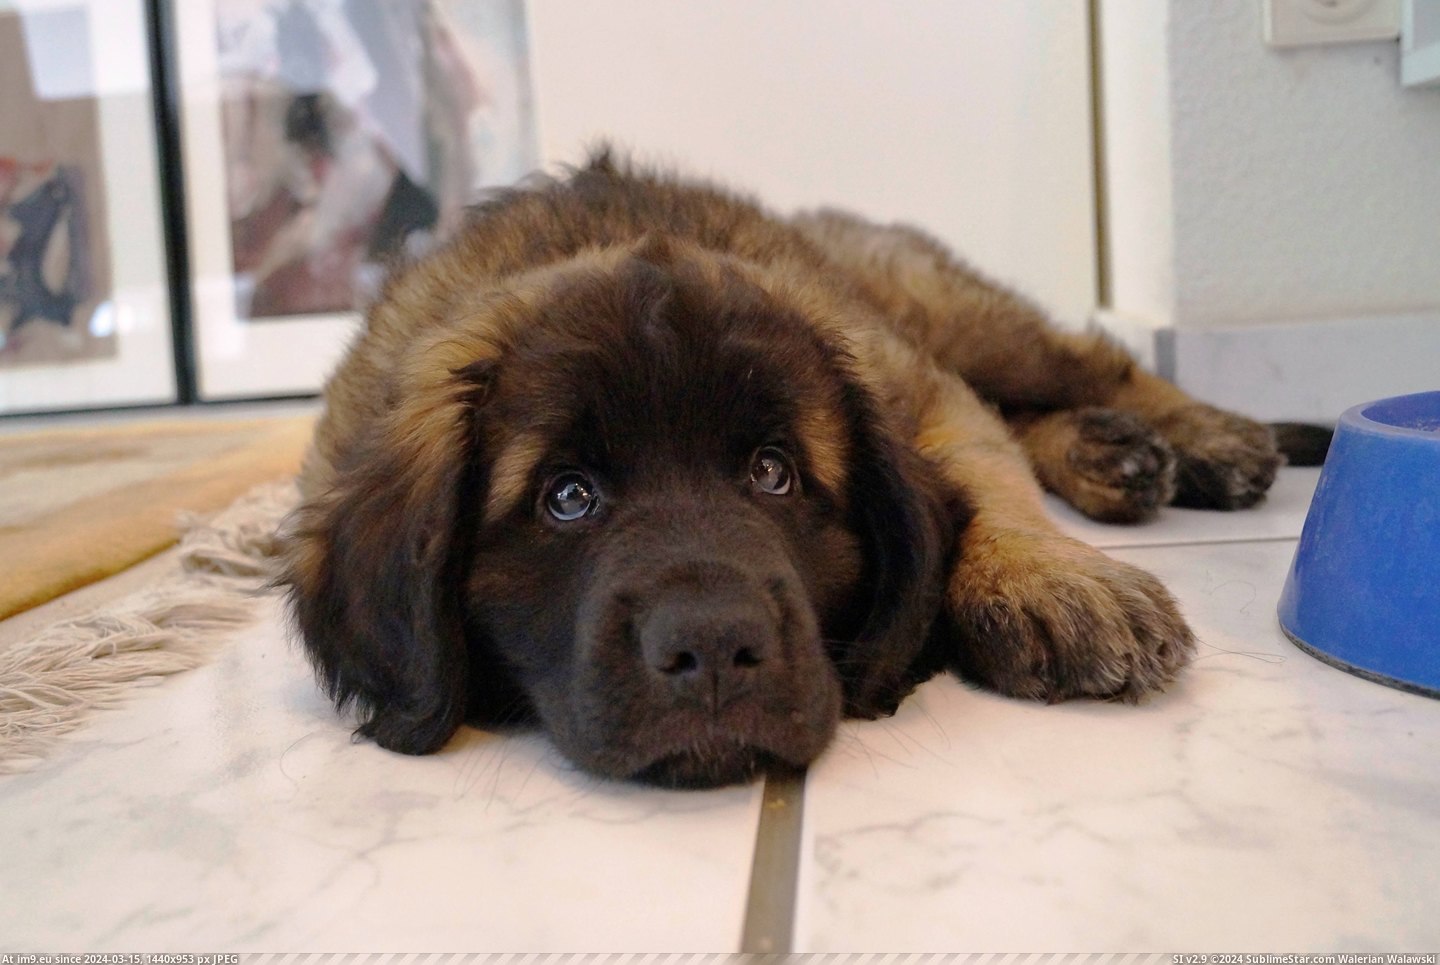 #Puppy #Weeks #Pounds #Cub #Leonberger #Father #Bear [Aww] Father just got a Leonberger puppy. 9 weeks, 19 pounds already. Like a little bear cub. Pic. (Obraz z album My r/AWW favs))